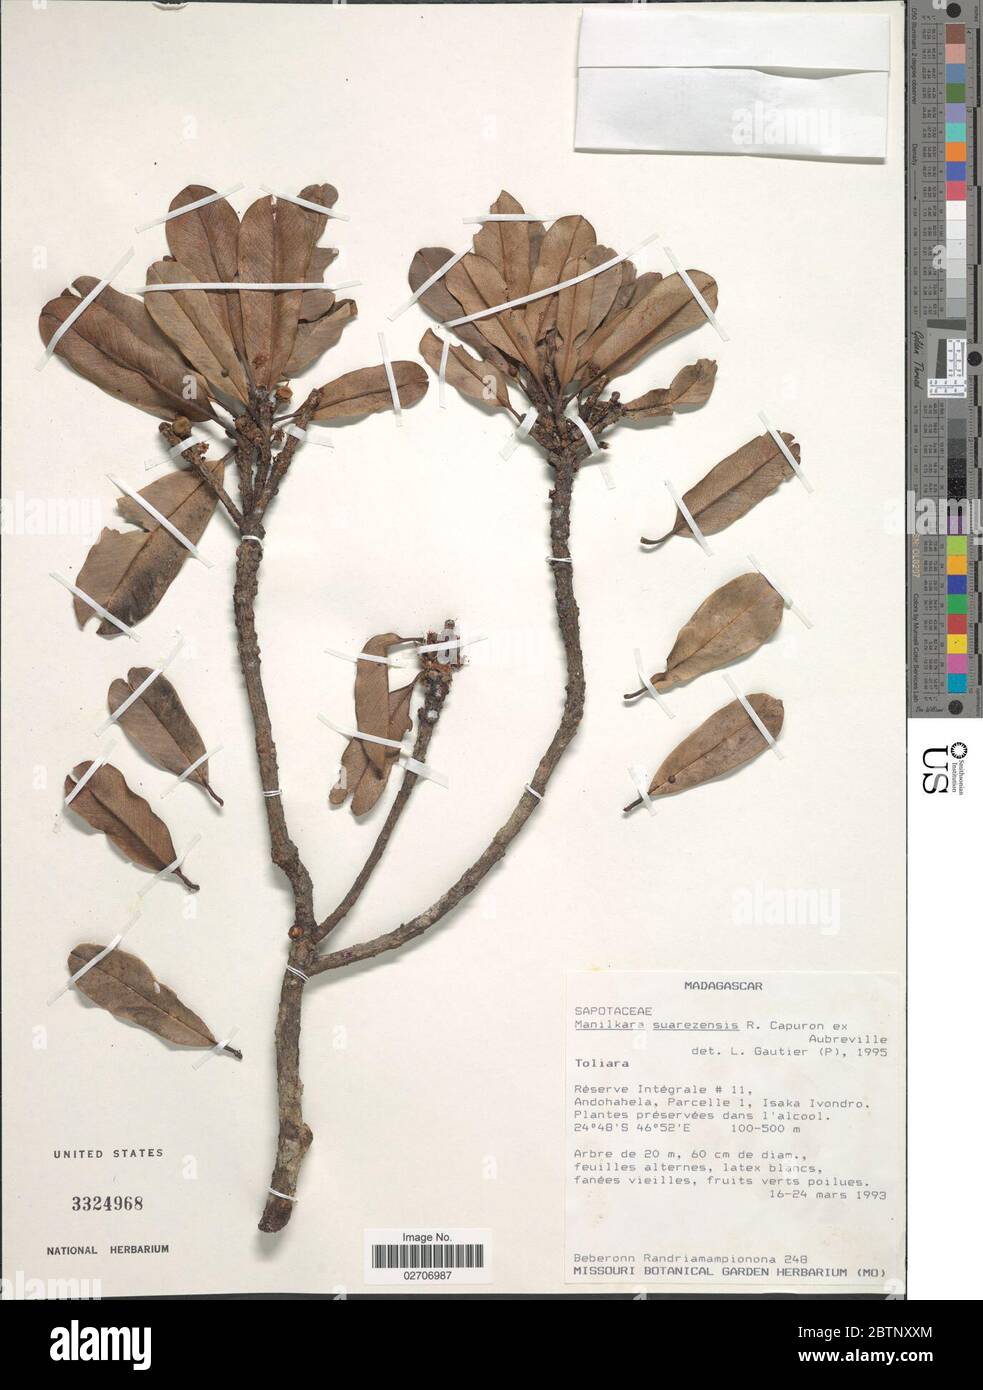 Manilkara suarezensis Capuron ex Aubrv. Stock Photo